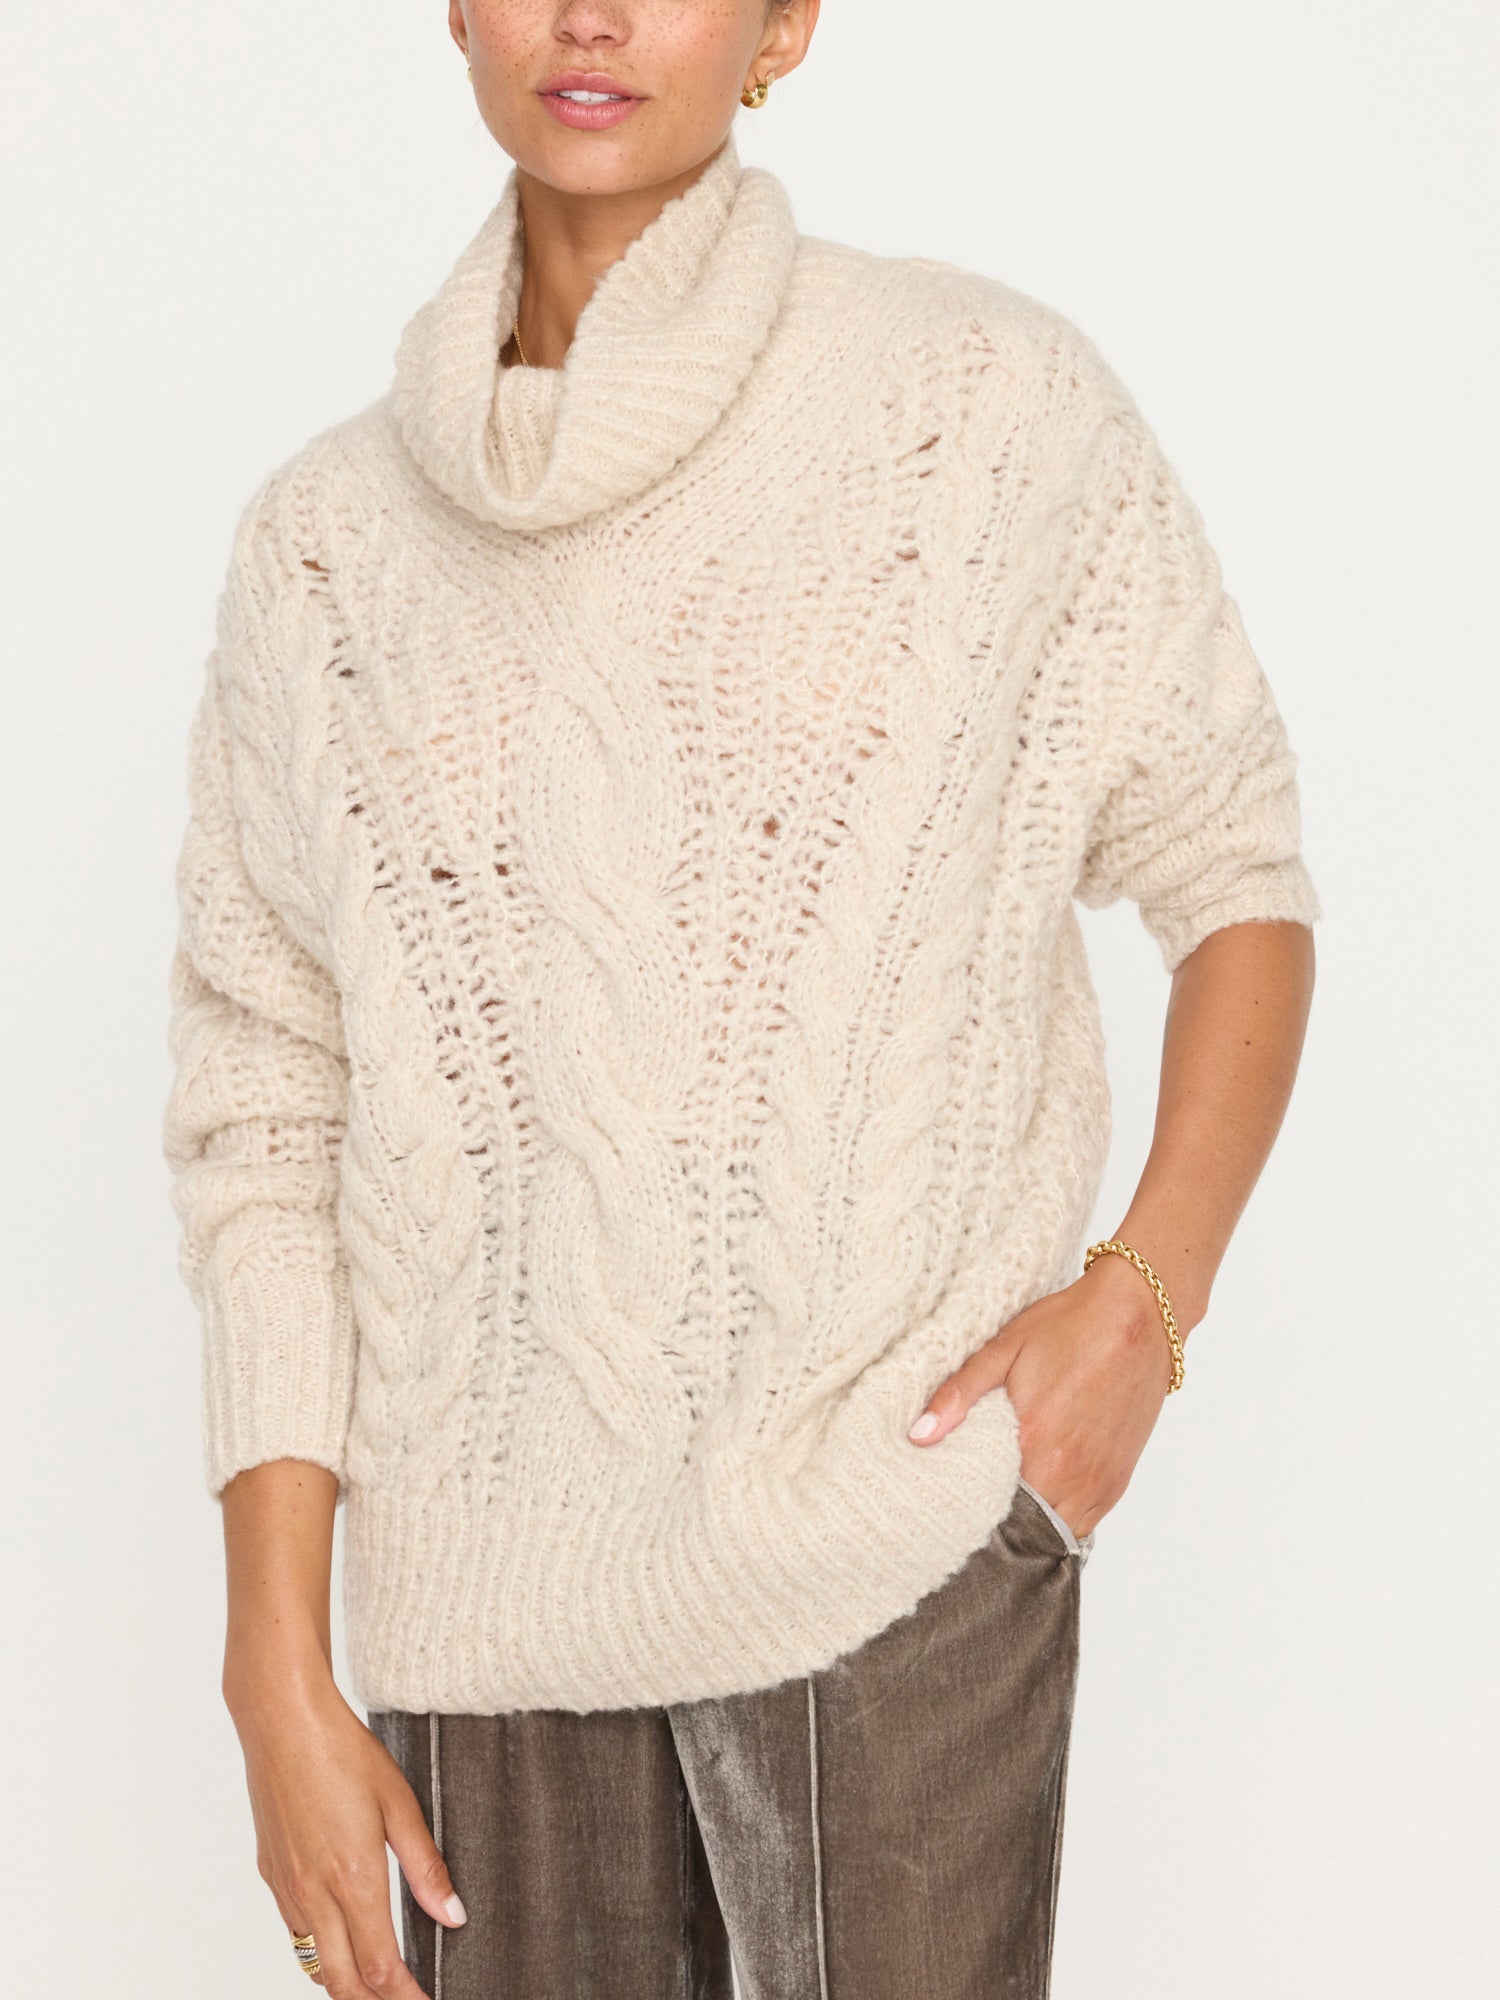 Elden cable knit beige turtleneck sweater front view 2